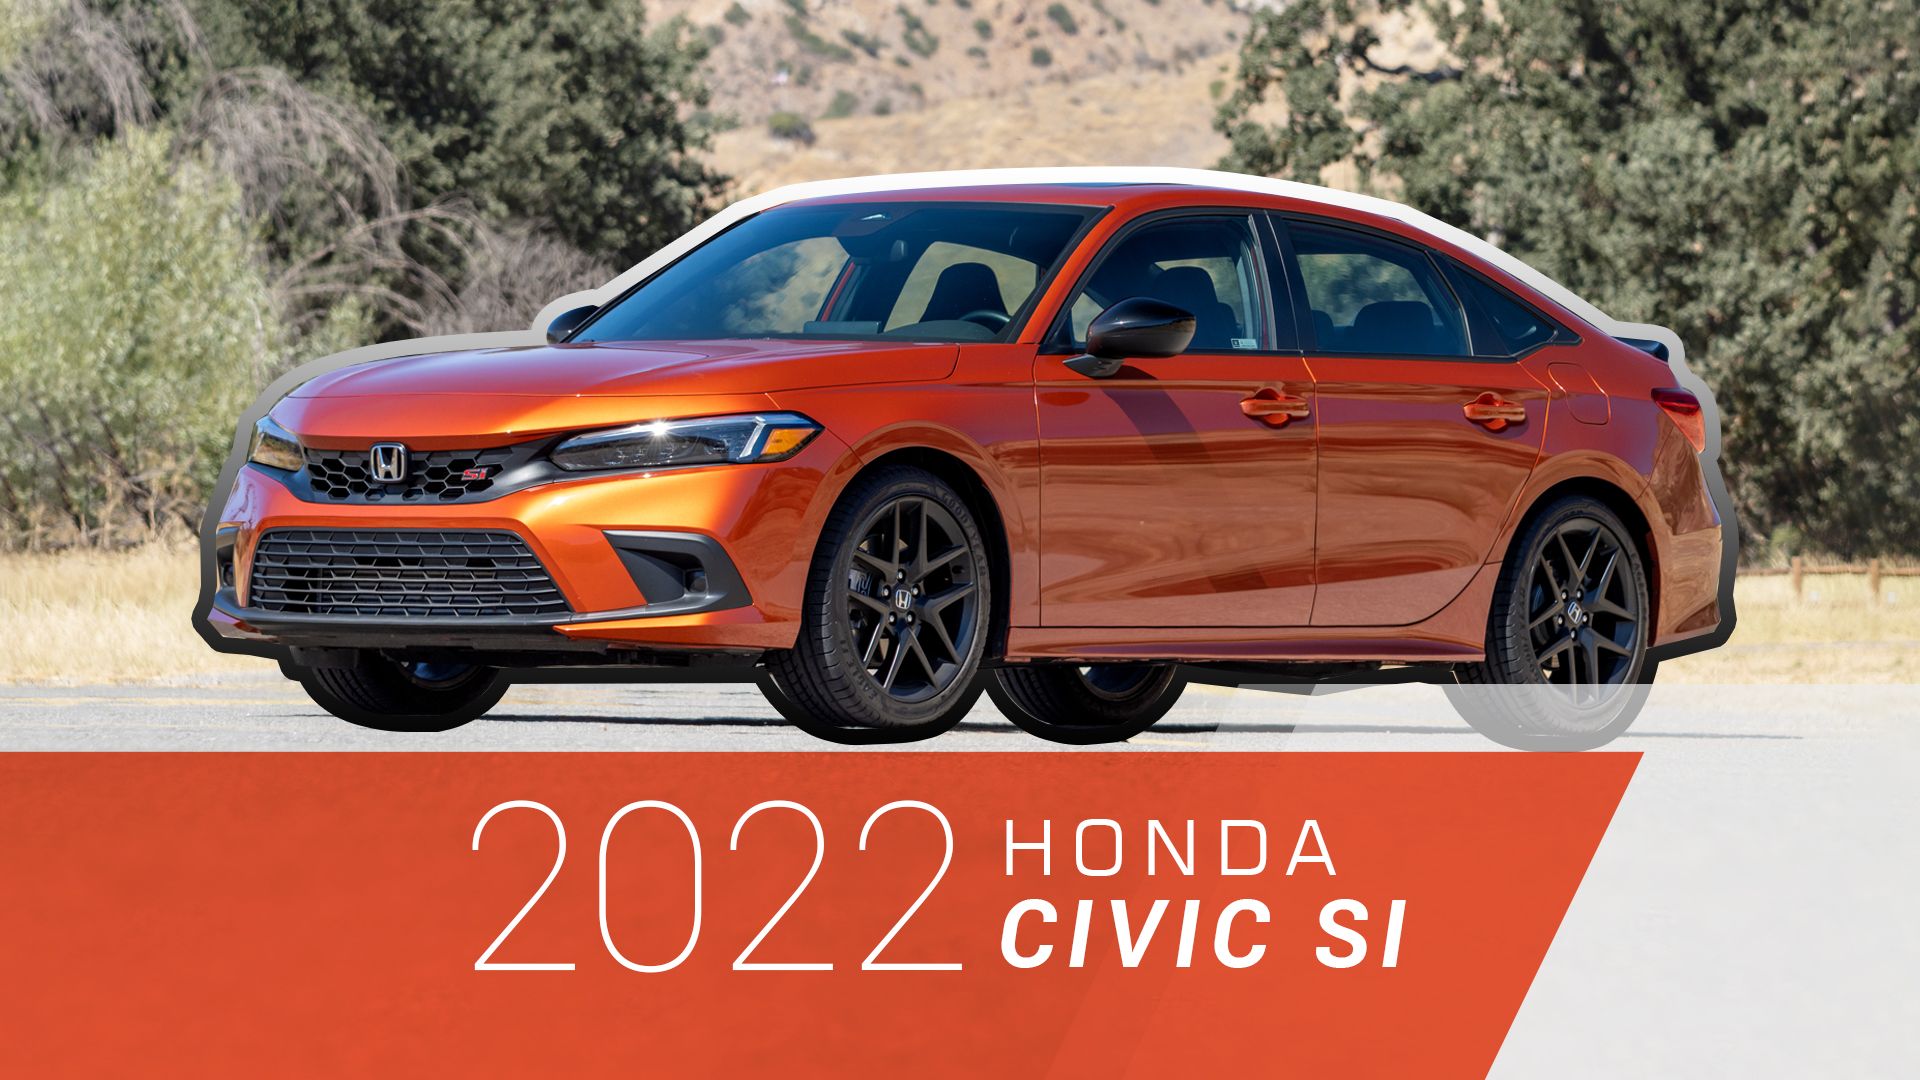 2022 2022 Honda Civic Si: A Sport Compact Master Class